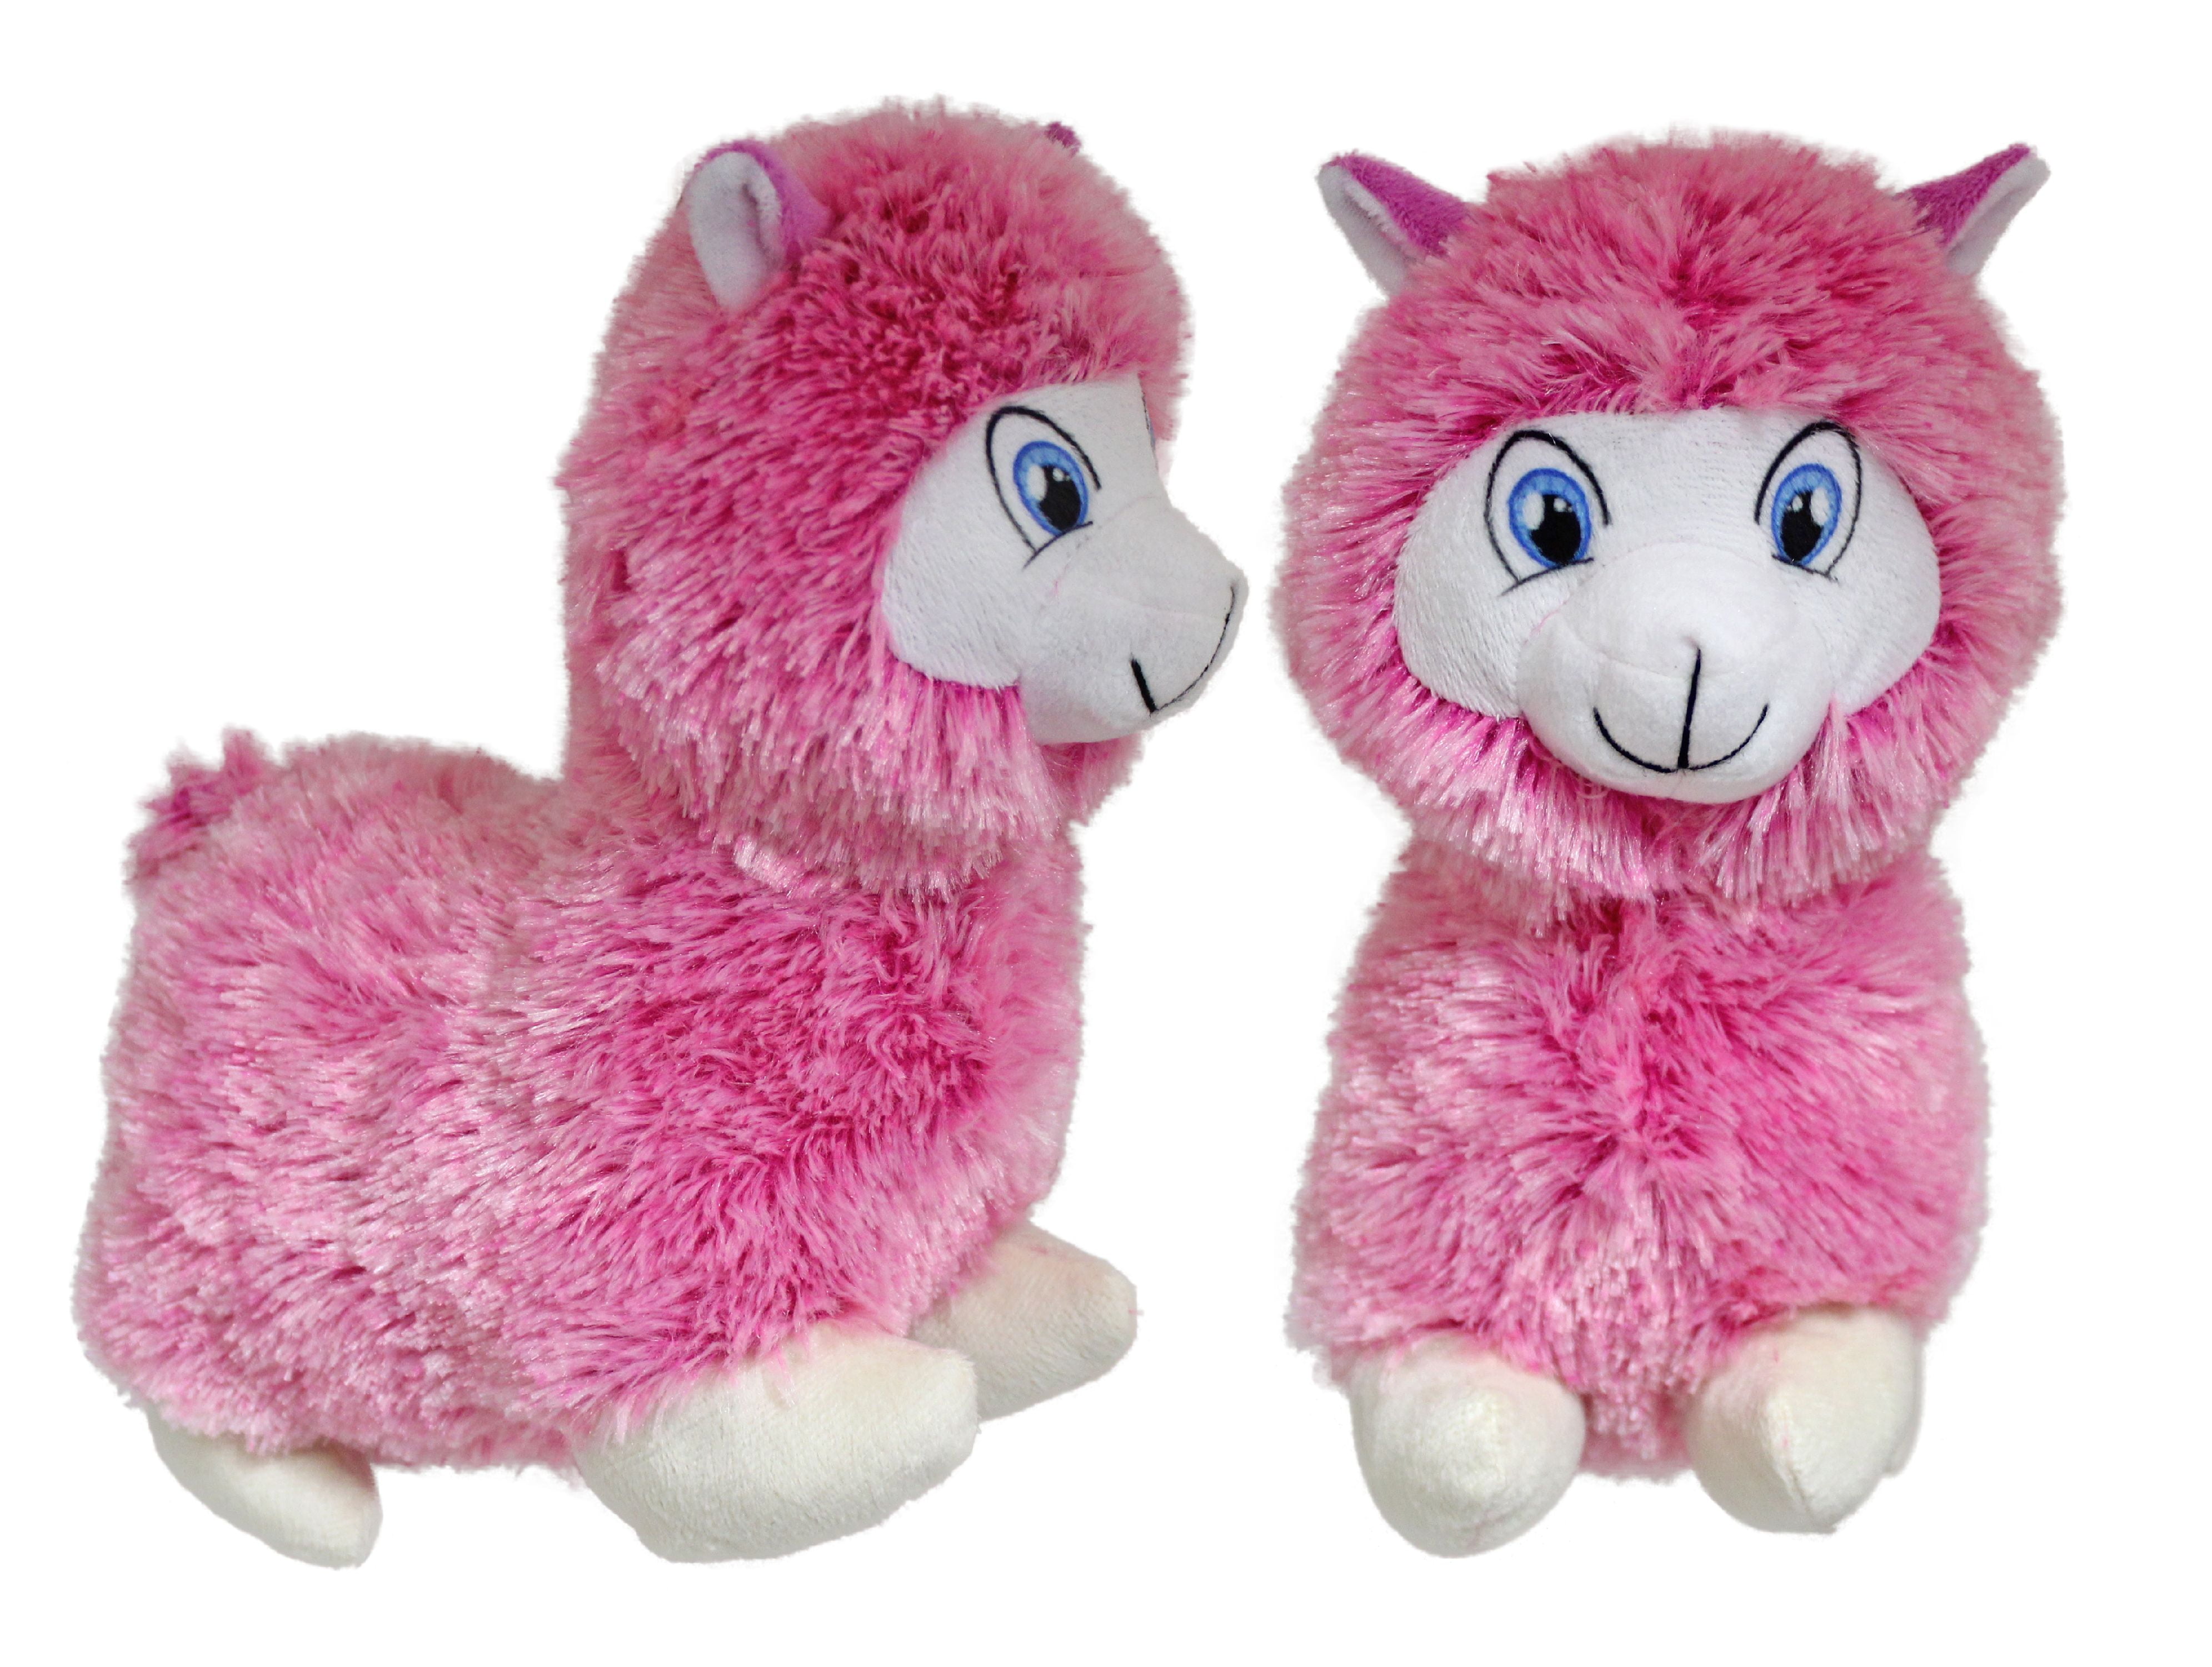 pink llama stuffed animal walmart